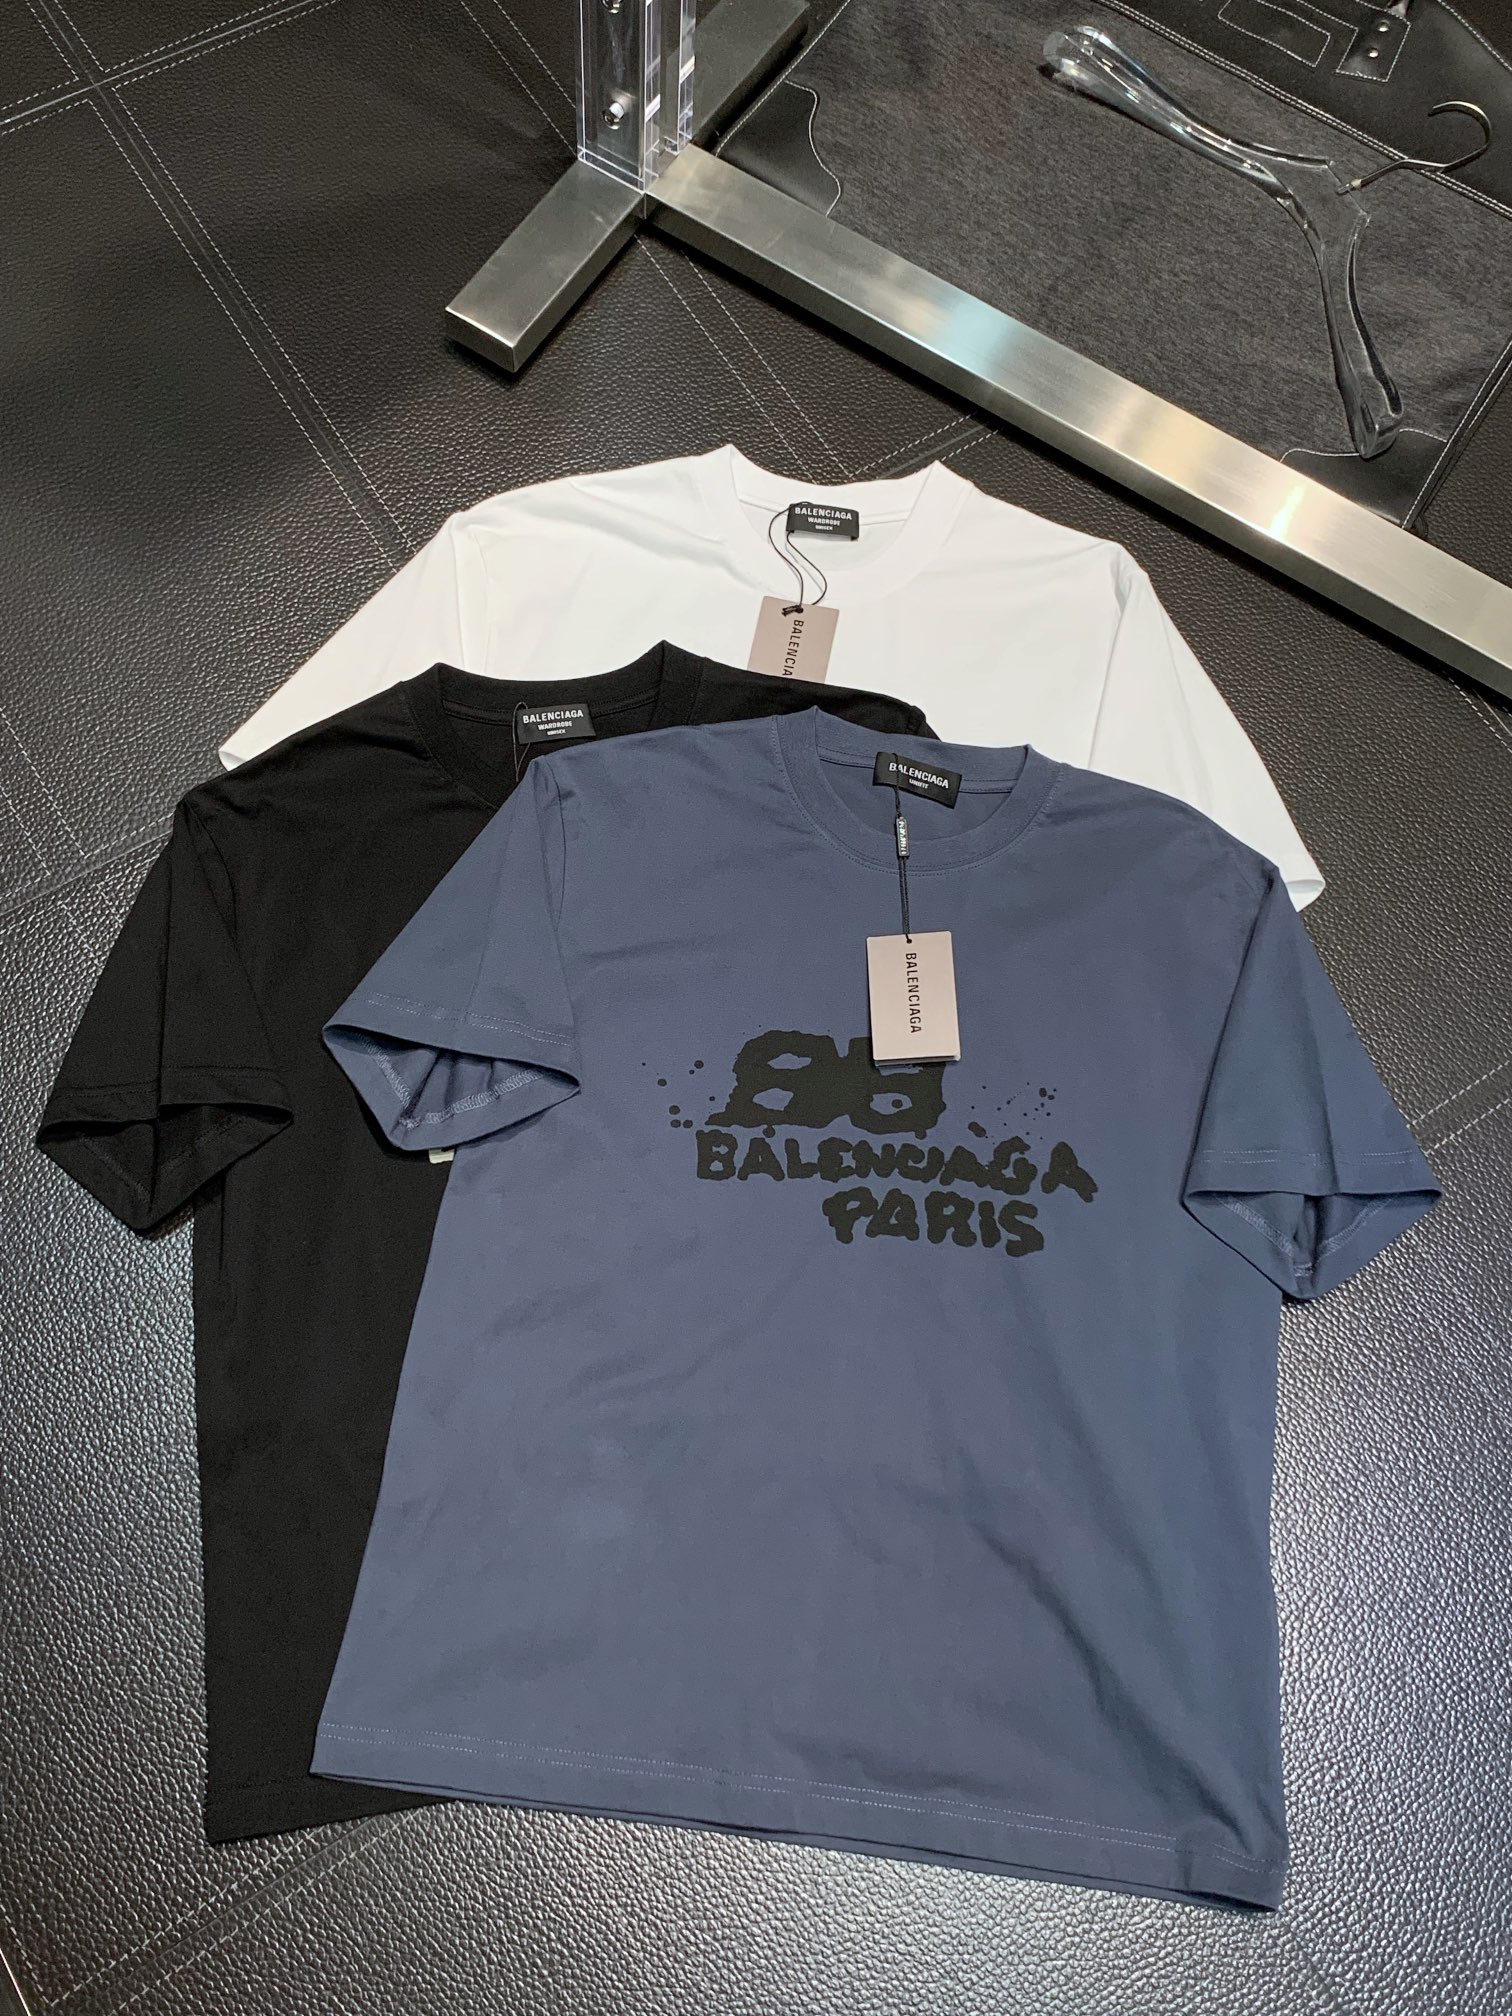 Balenciaga Clothing T-Shirt Men Cotton Fashion Short Sleeve